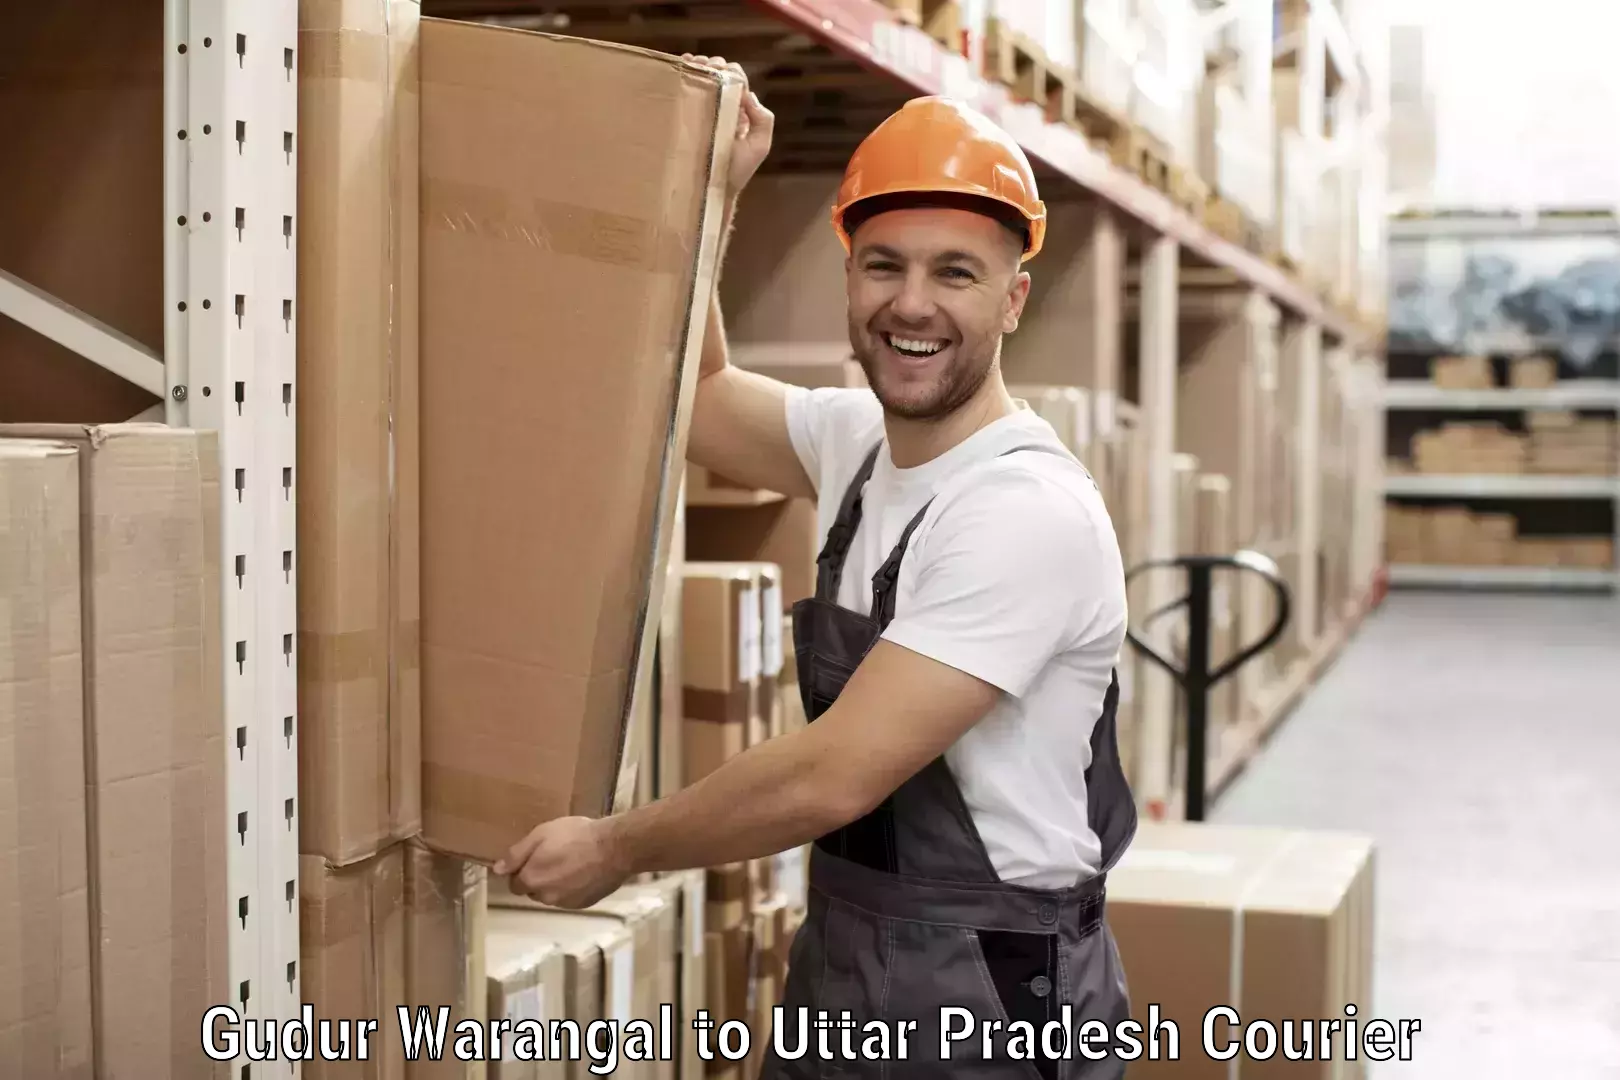 Efficient order fulfillment Gudur Warangal to Uttar Pradesh